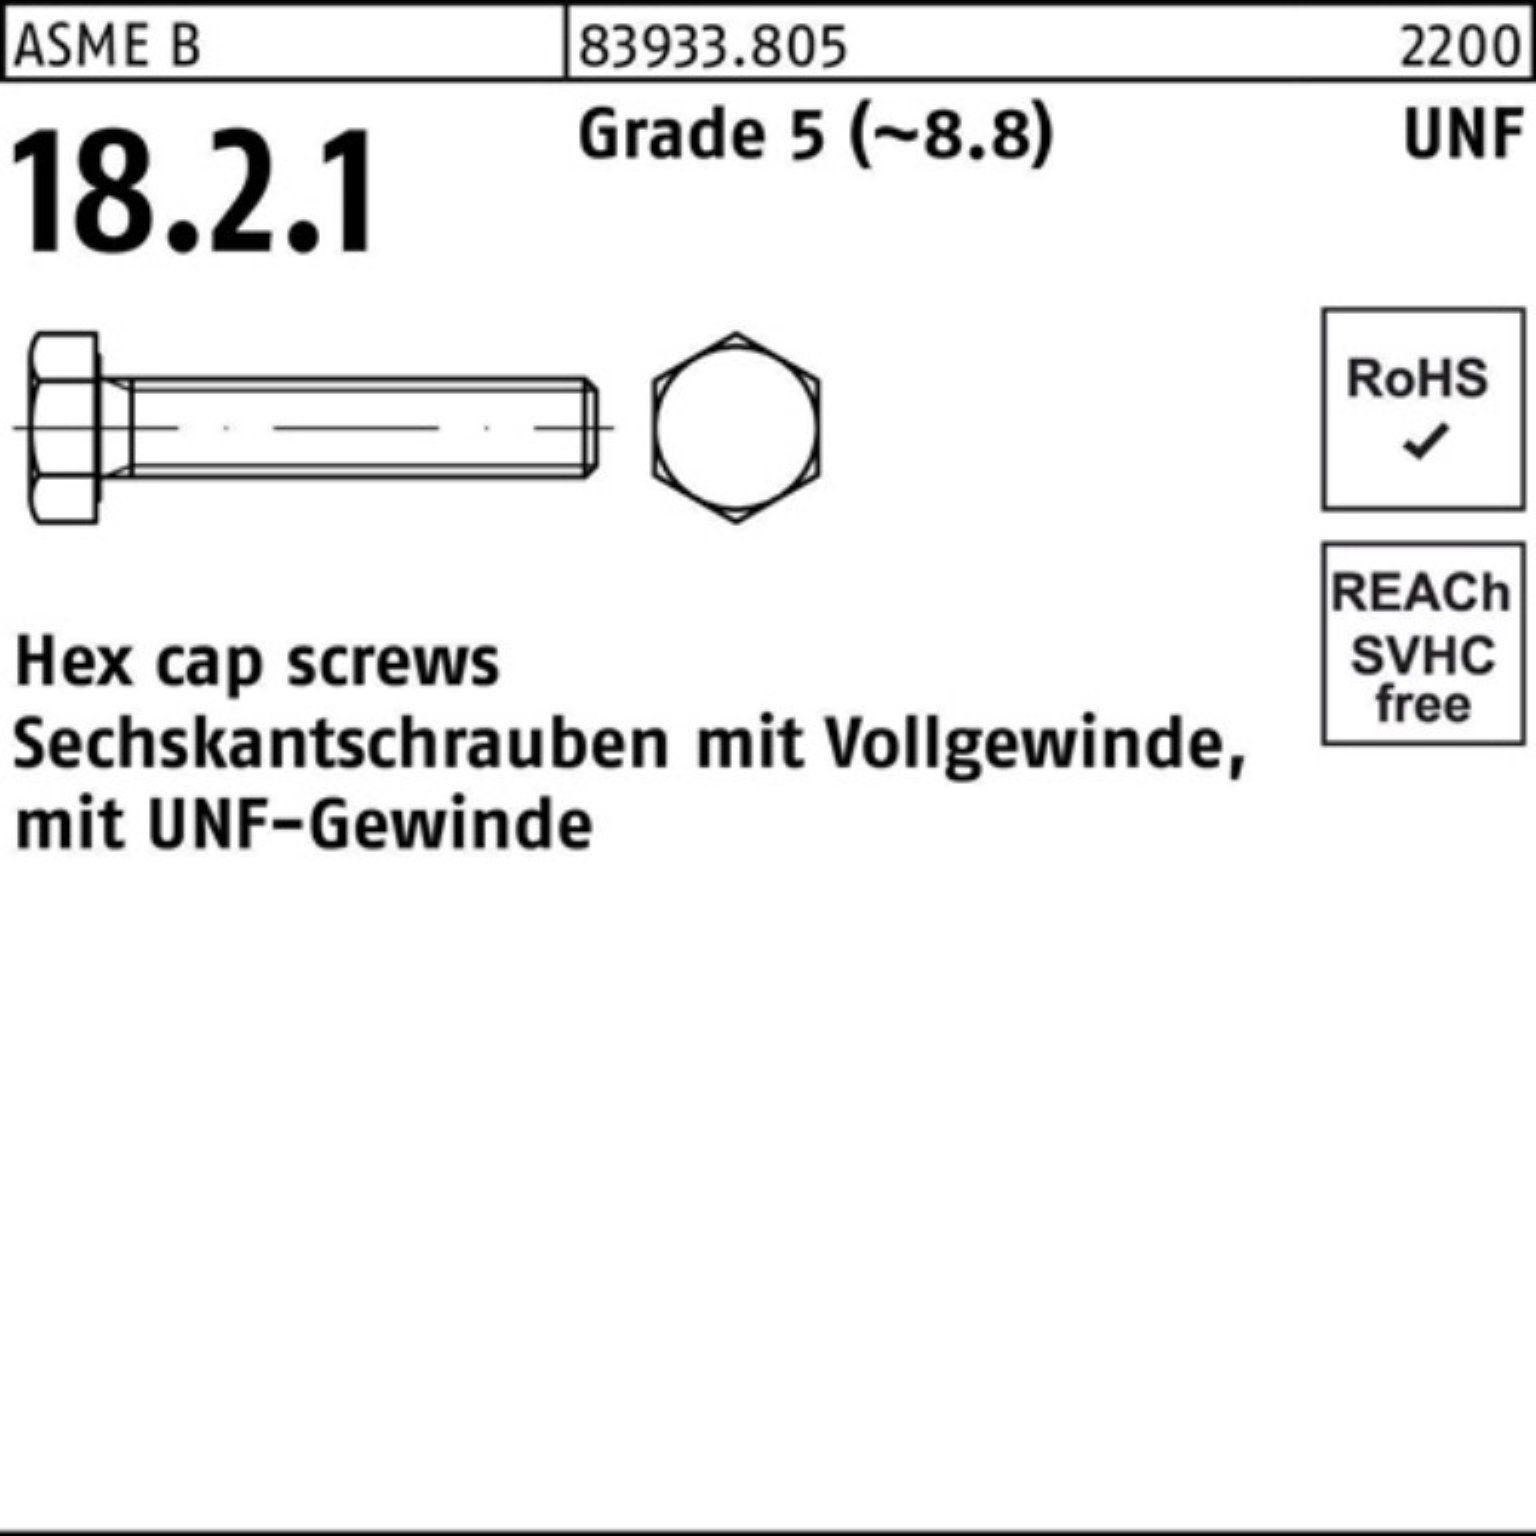 5 Pack VG 1/2x 3/4 100er R 1 Grade Reyher Sechskantschraube UNF-Gewinde Sechskantschraube 83933